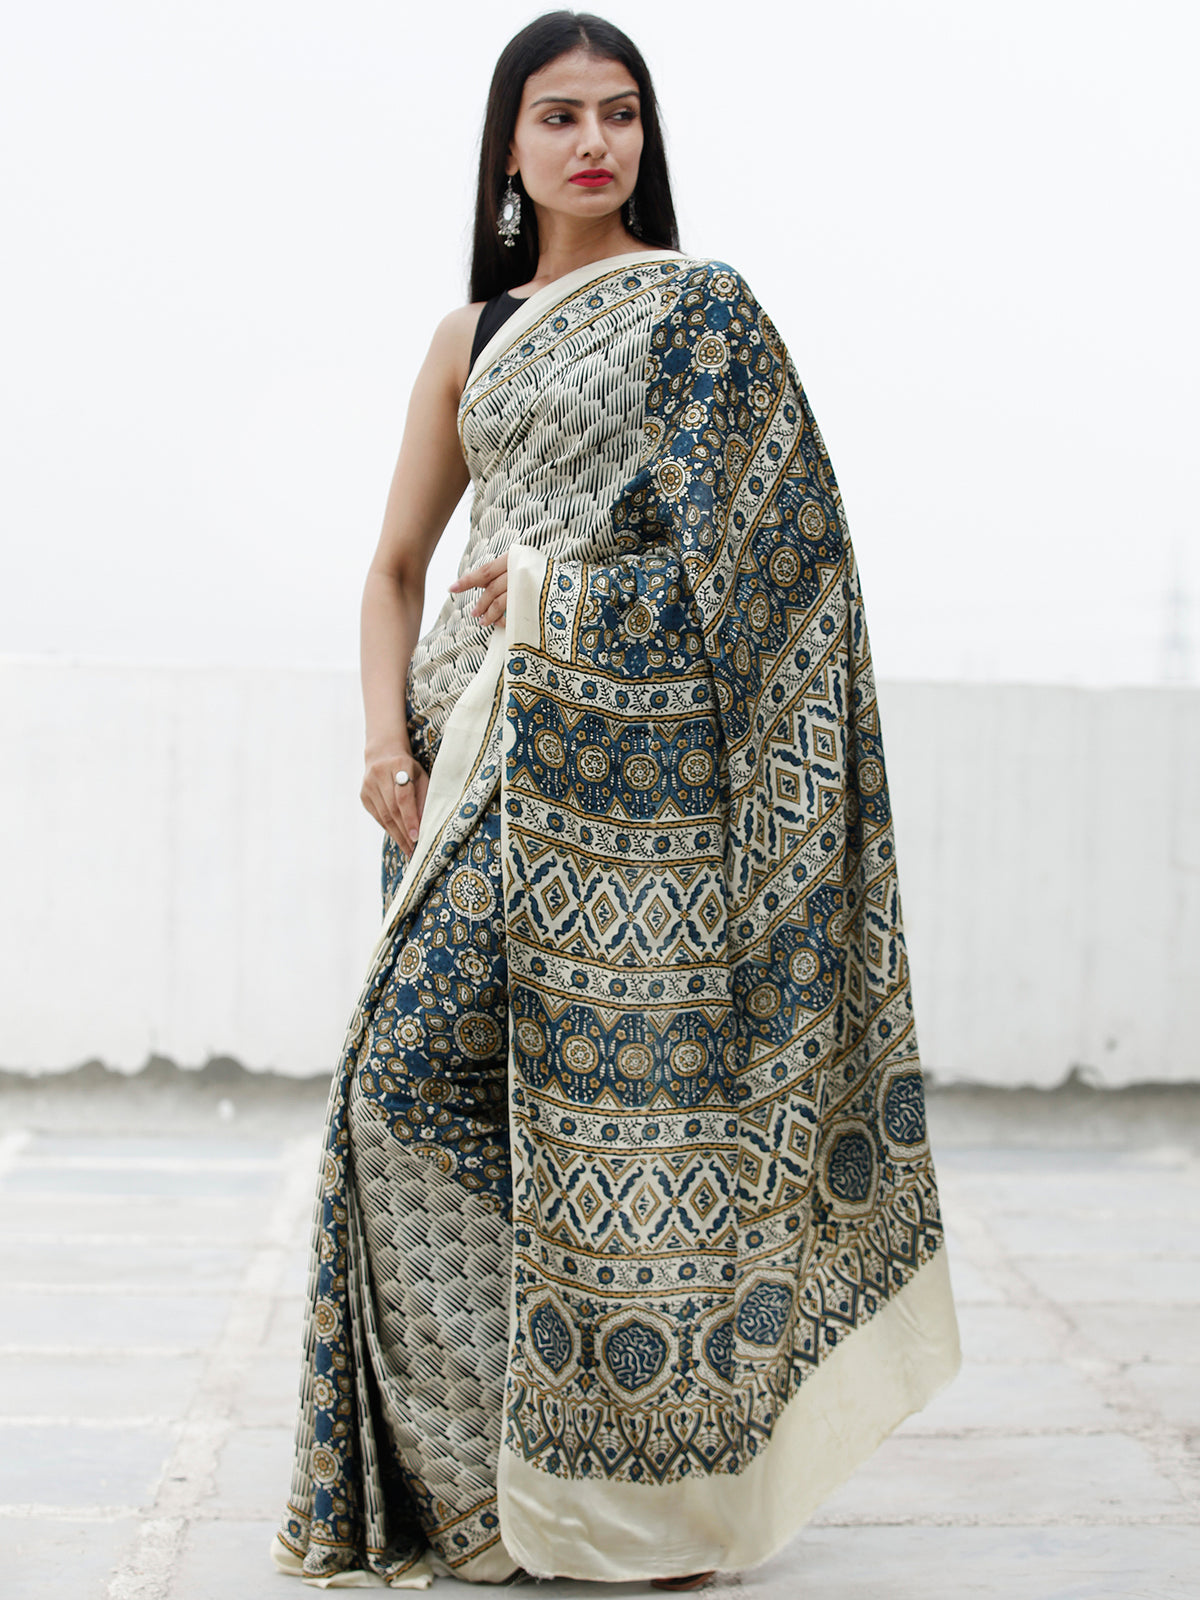 Off White Indigo Peanut Brown Ajrakh Hand Block Printed Modal Silk Saree in Natural Colors - S031703715